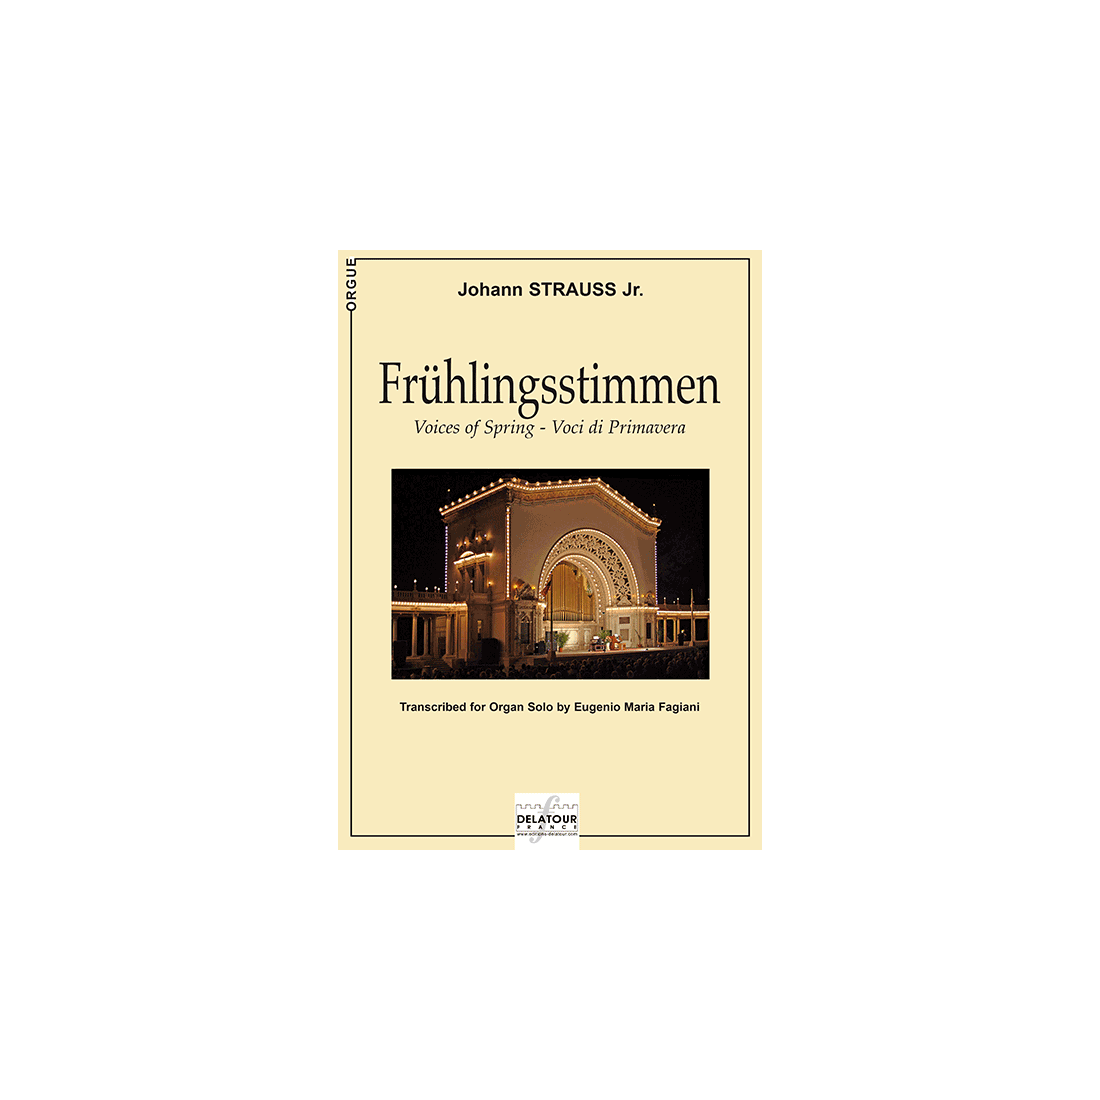 Frühlingsstimmen (Voices of Spring) pour orgue